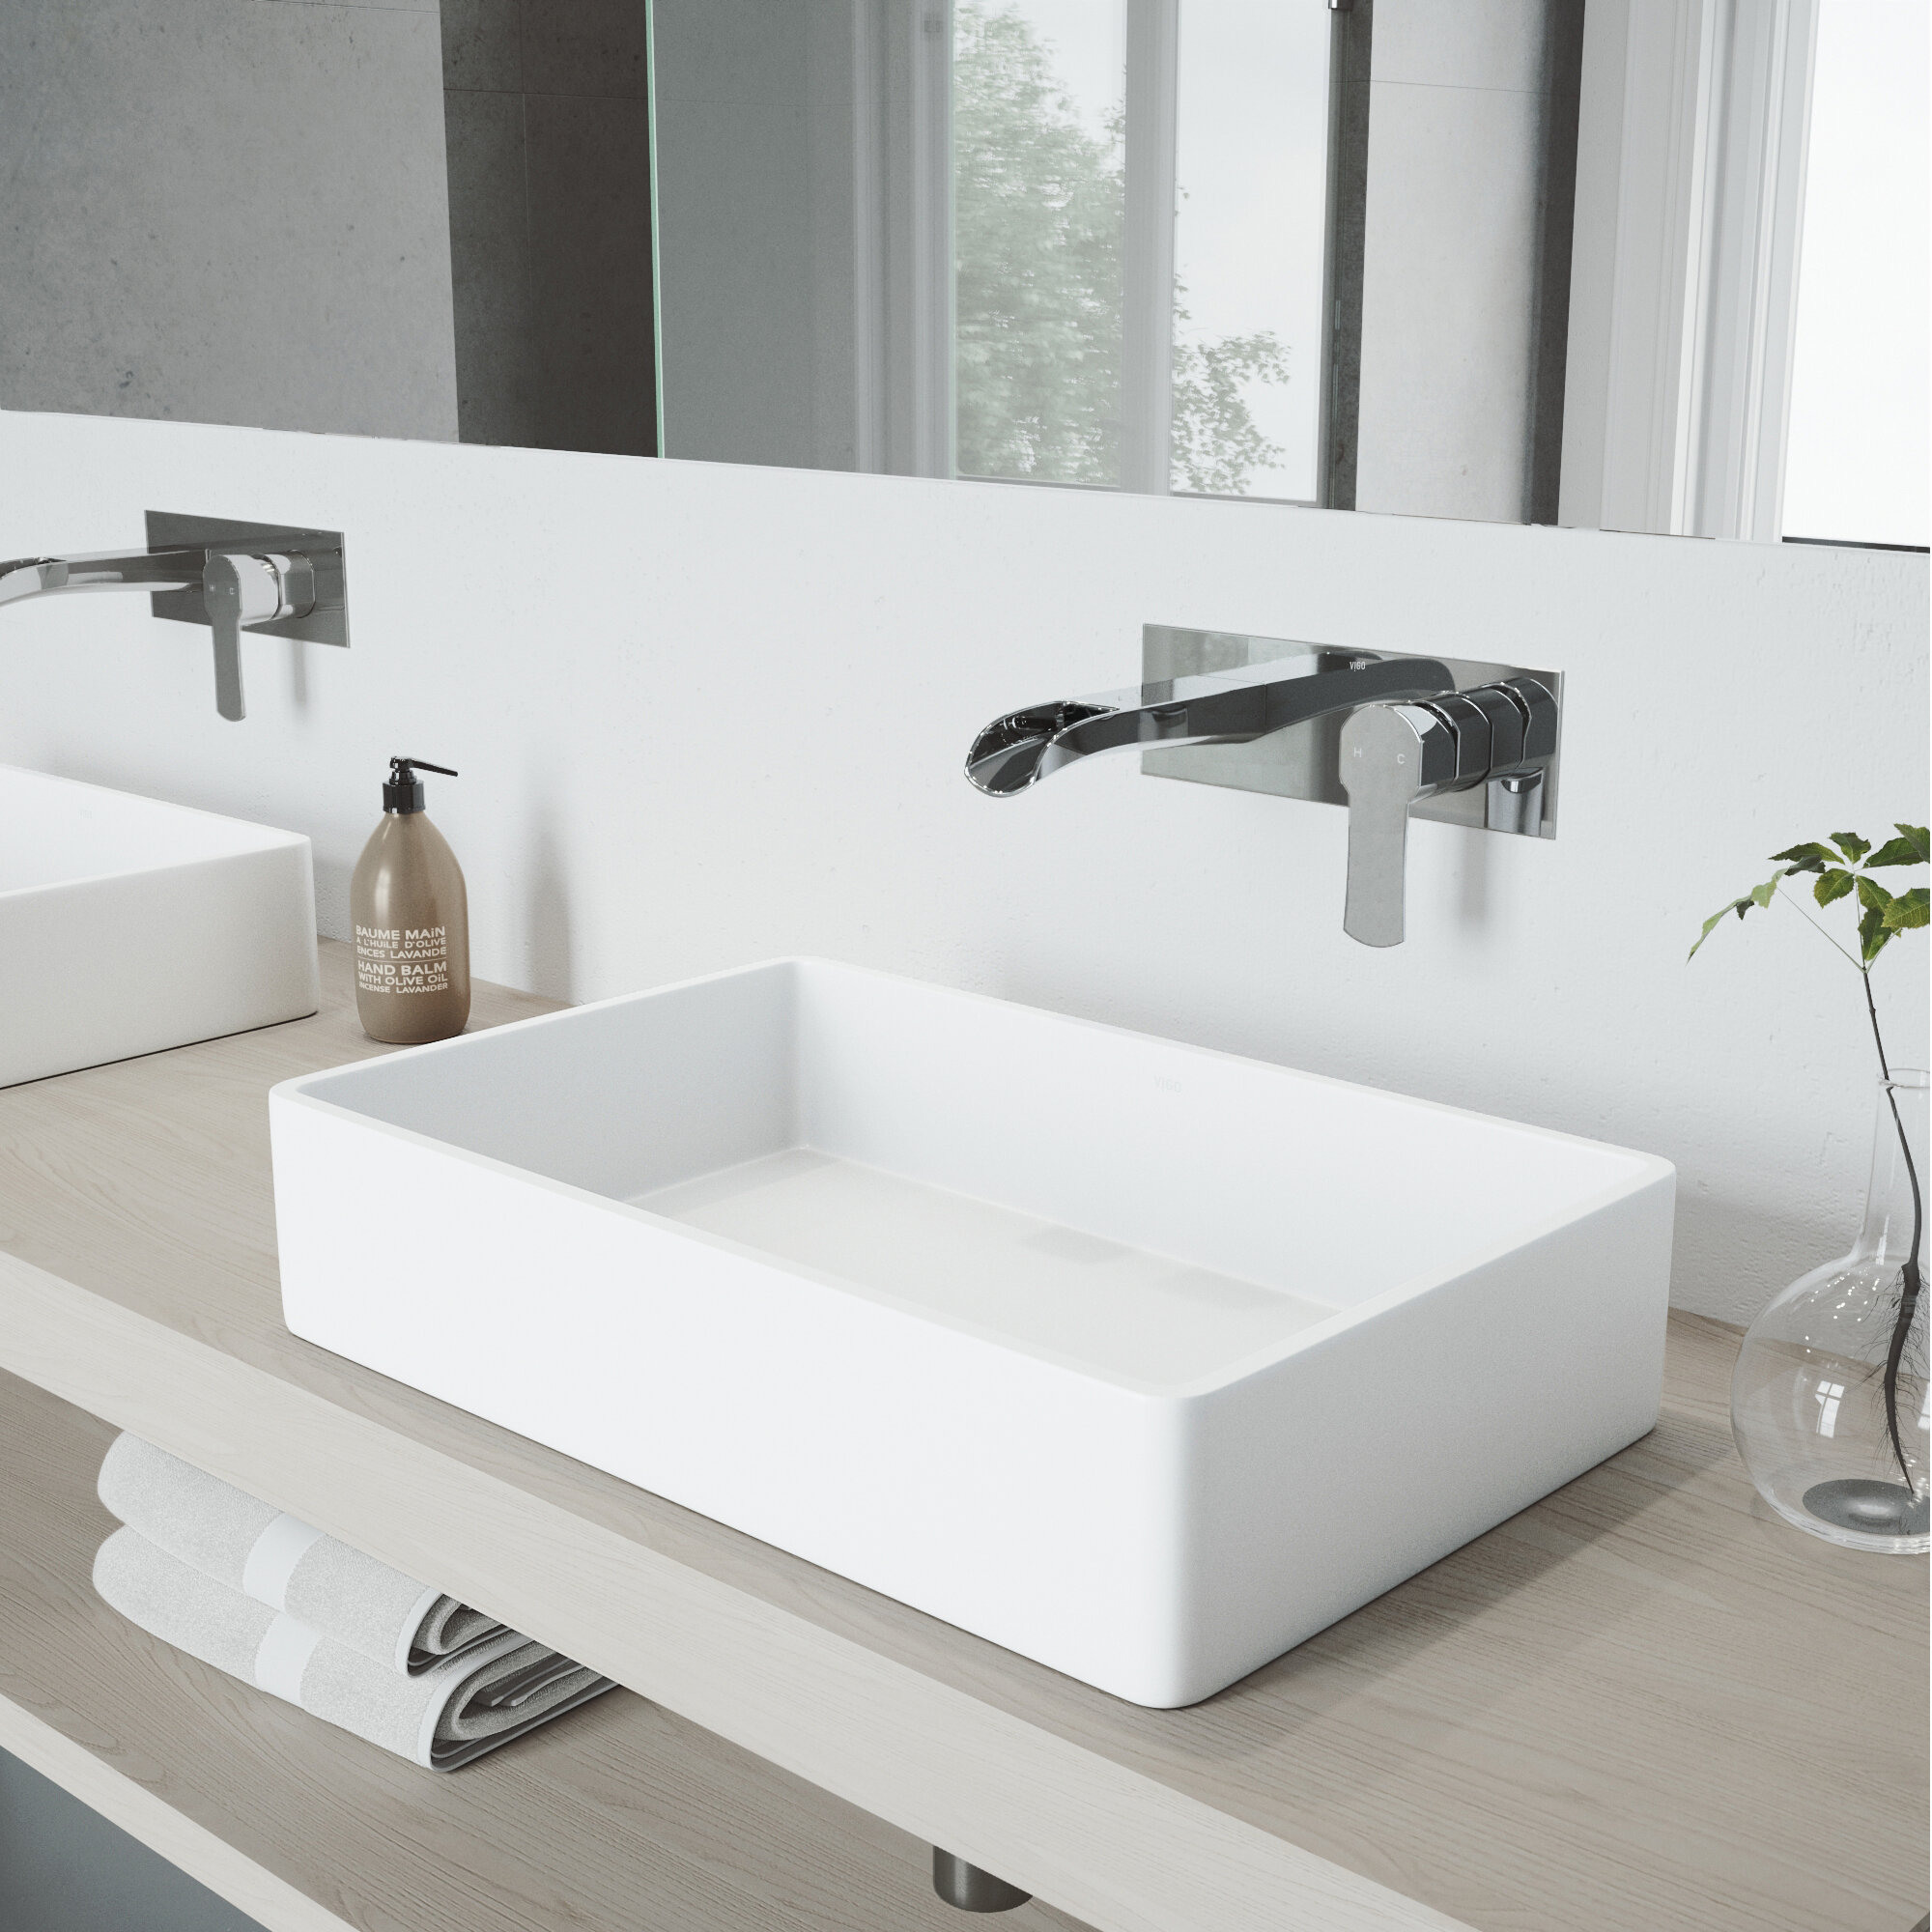 Vigo White Stone Rectangular Vessel Bathroom Sink With Faucet Reviews Wayfair